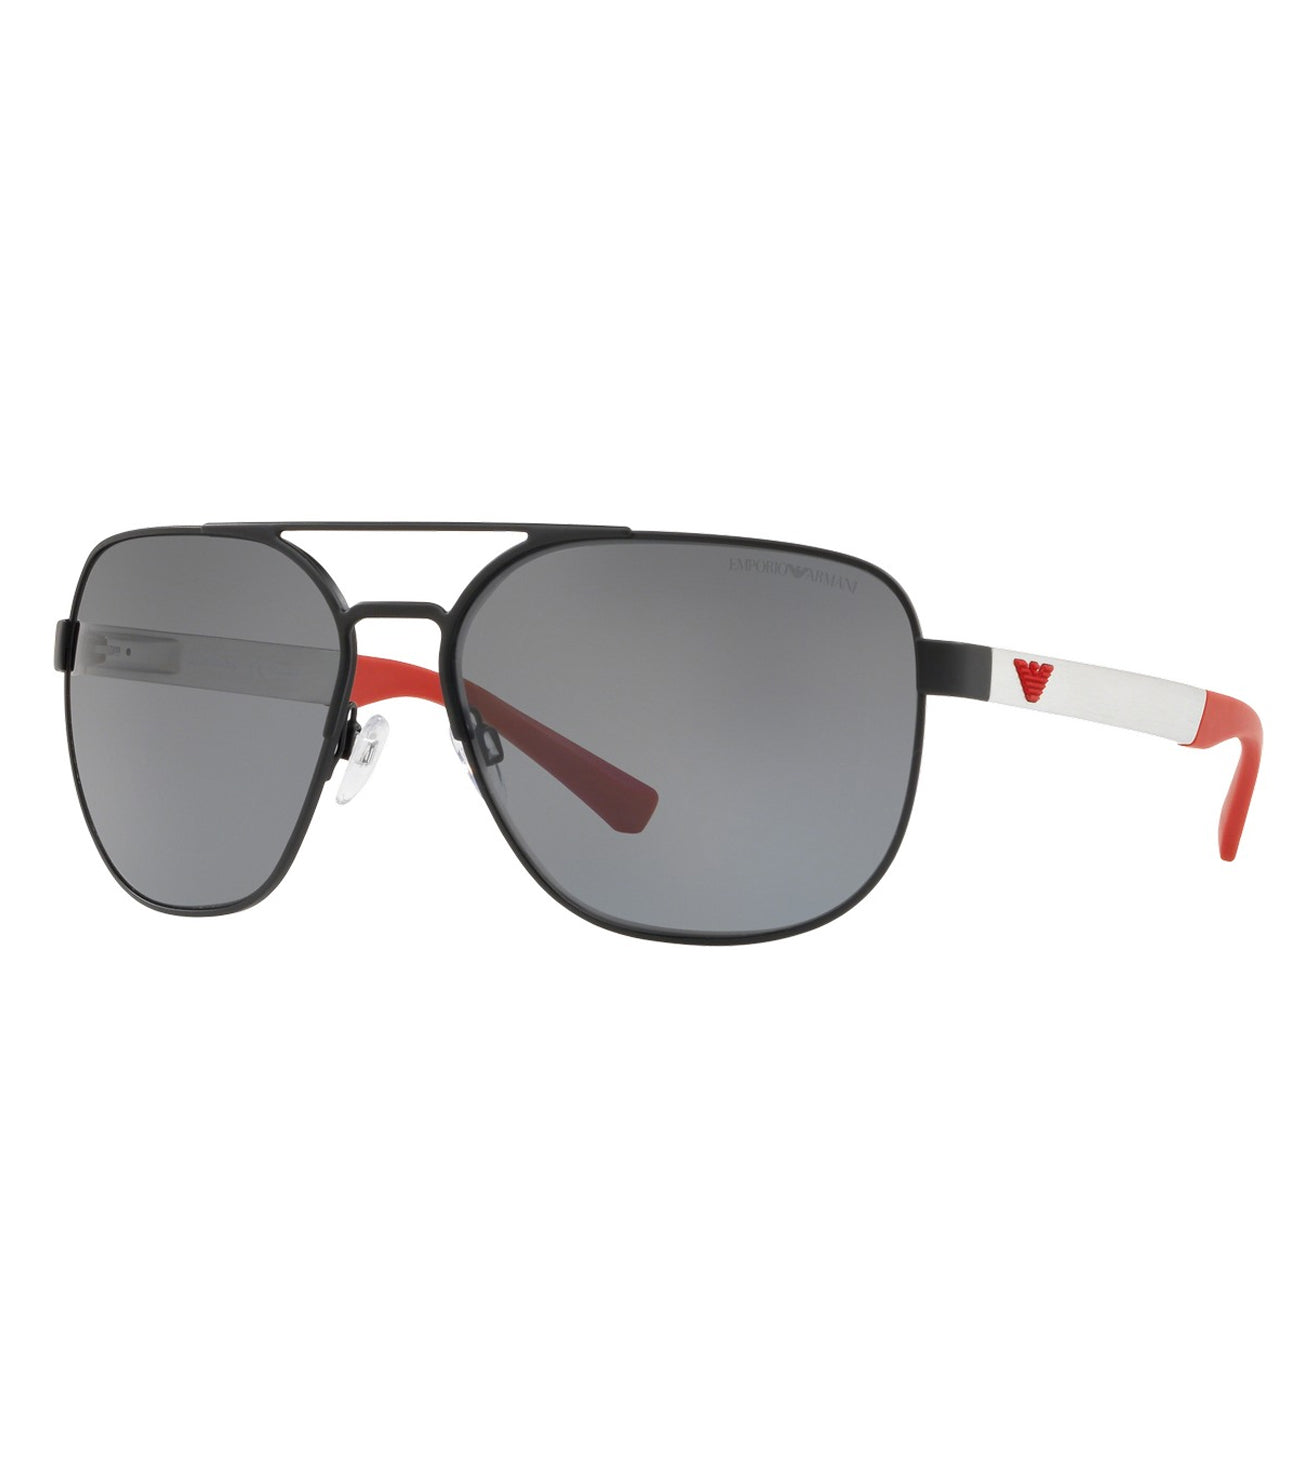 Emporio Armani Men's Grey Aviator Sunglasses